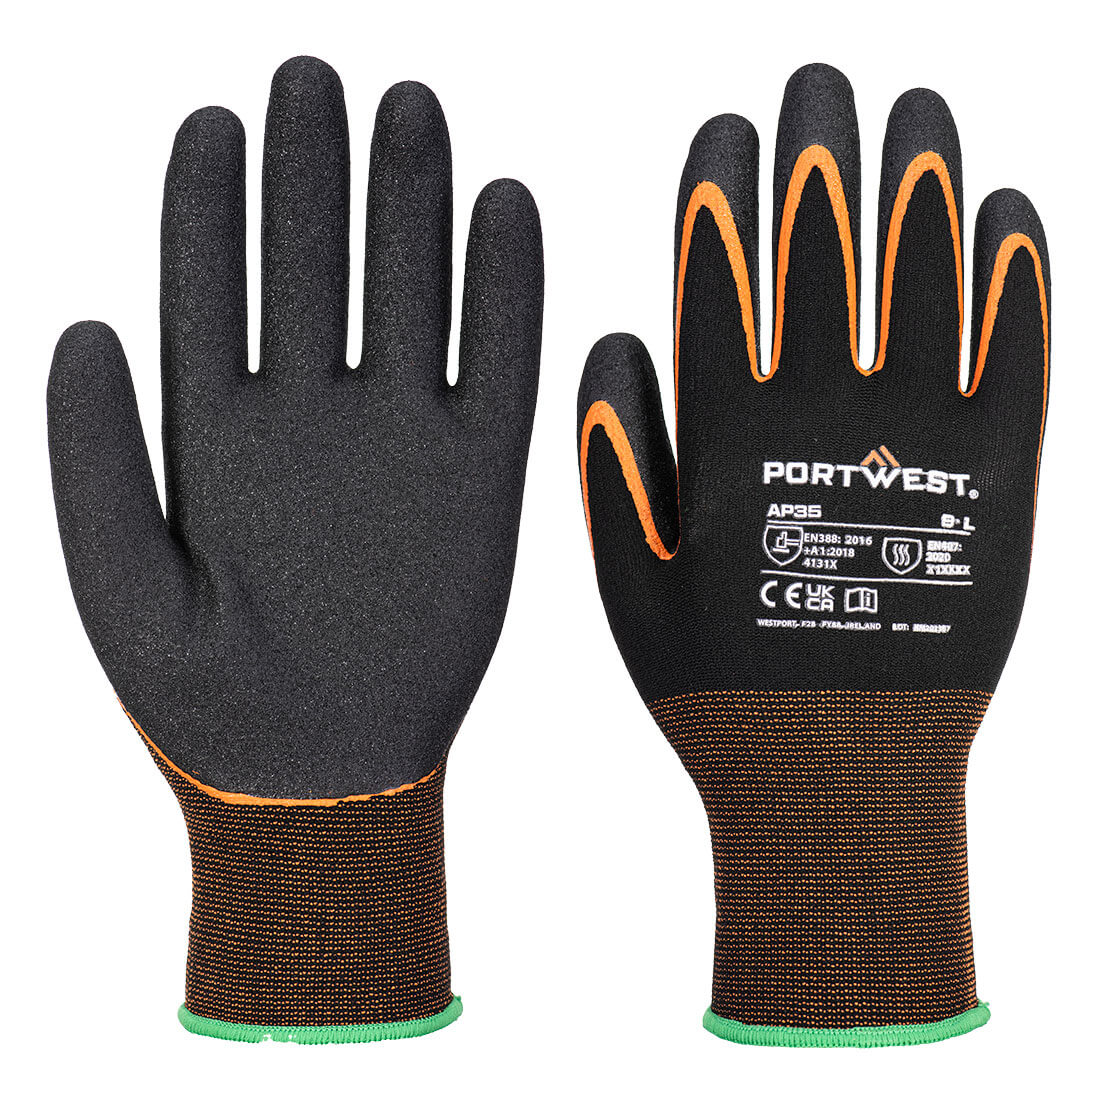 AP35 - Grip 15 Nitrile Double Palm Glove